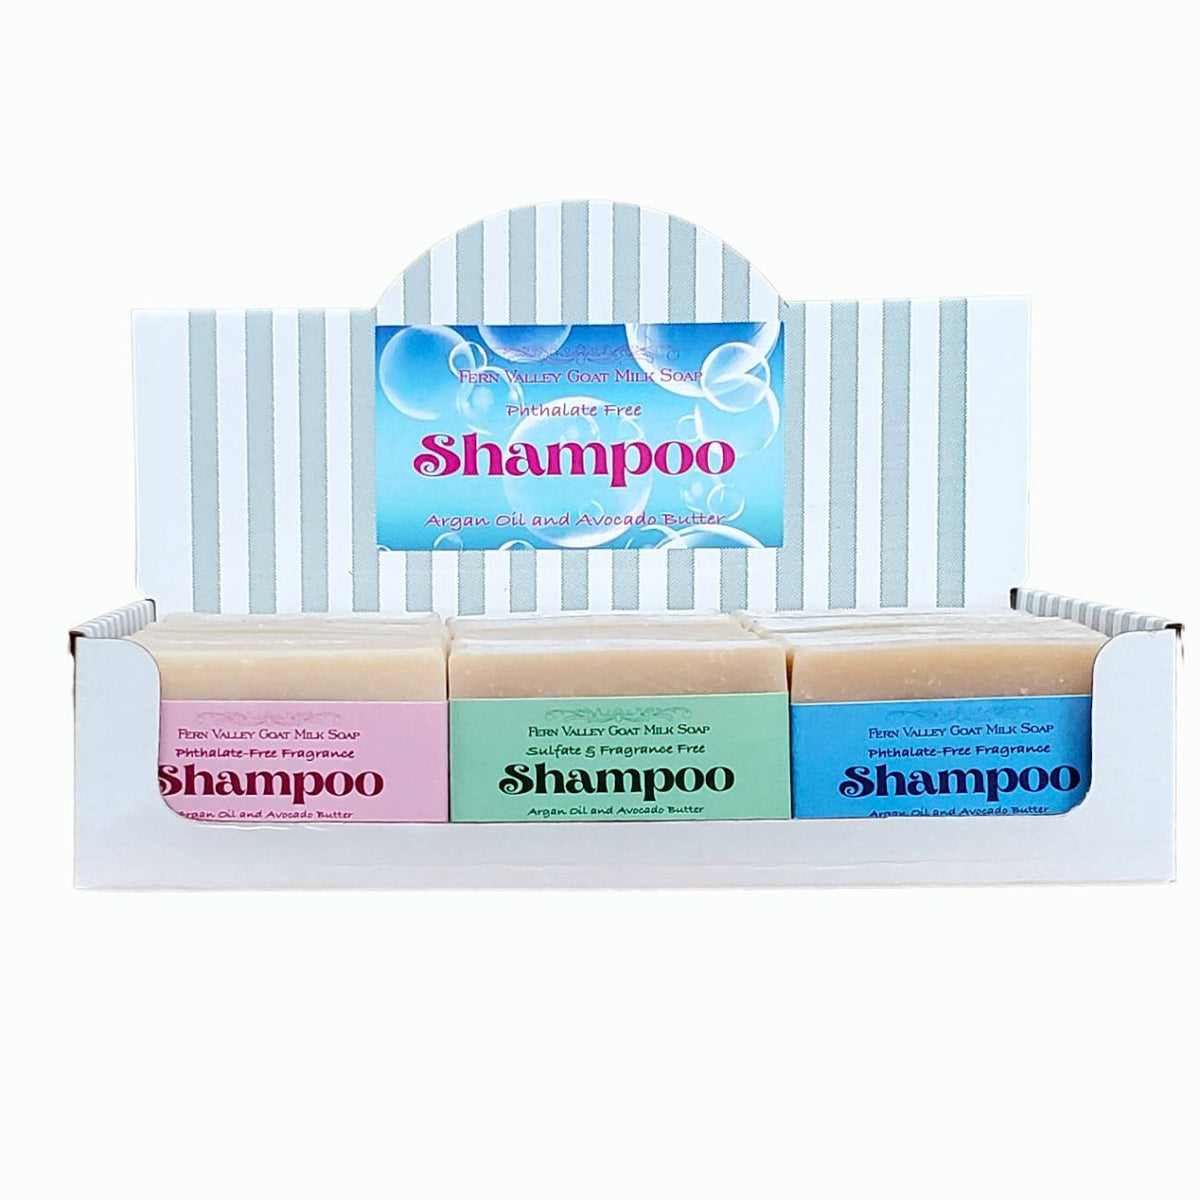 Shampoo Bar POP Display Box